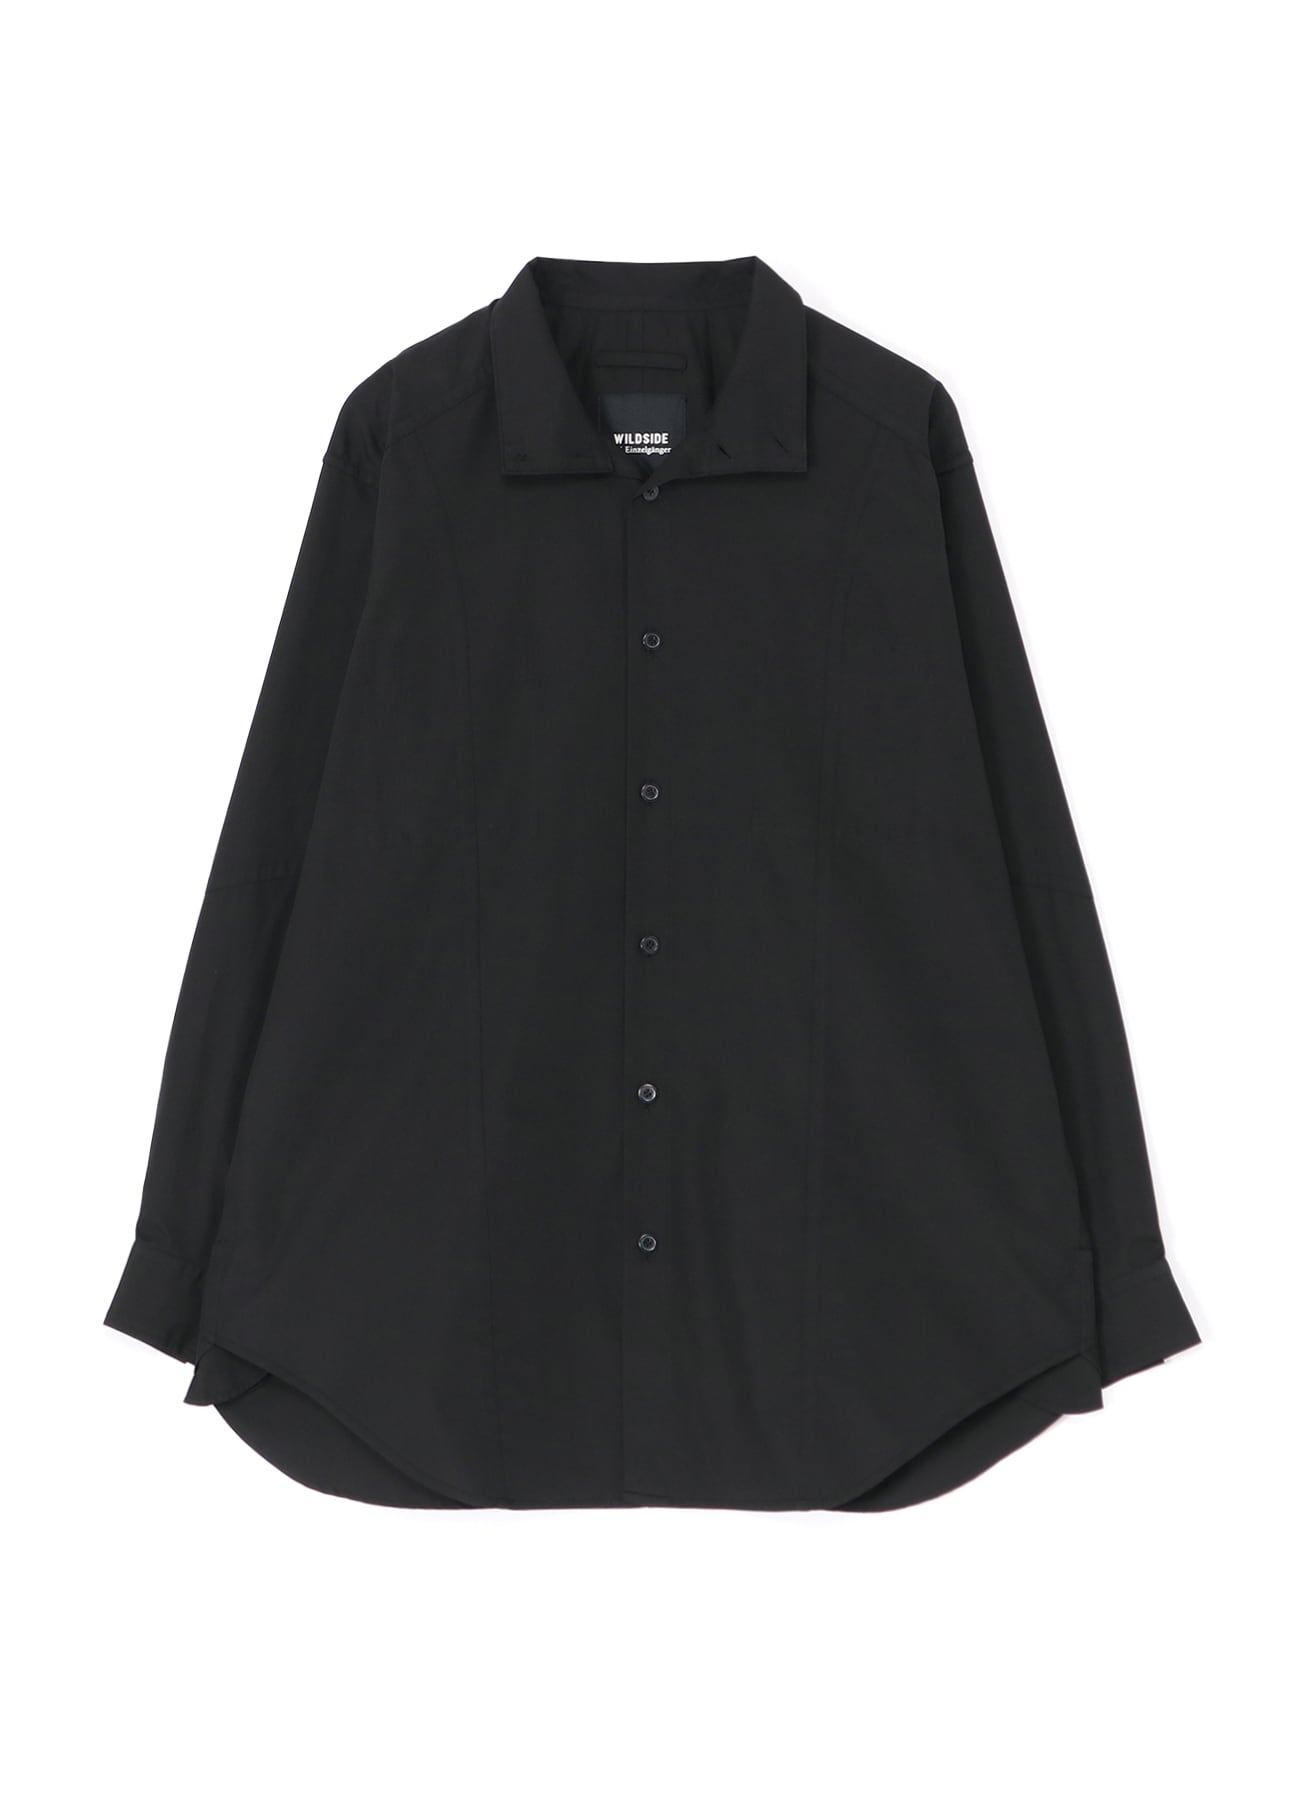 WILDSIDE × Kie Einzelganger Cotton Broadcloth Shirt